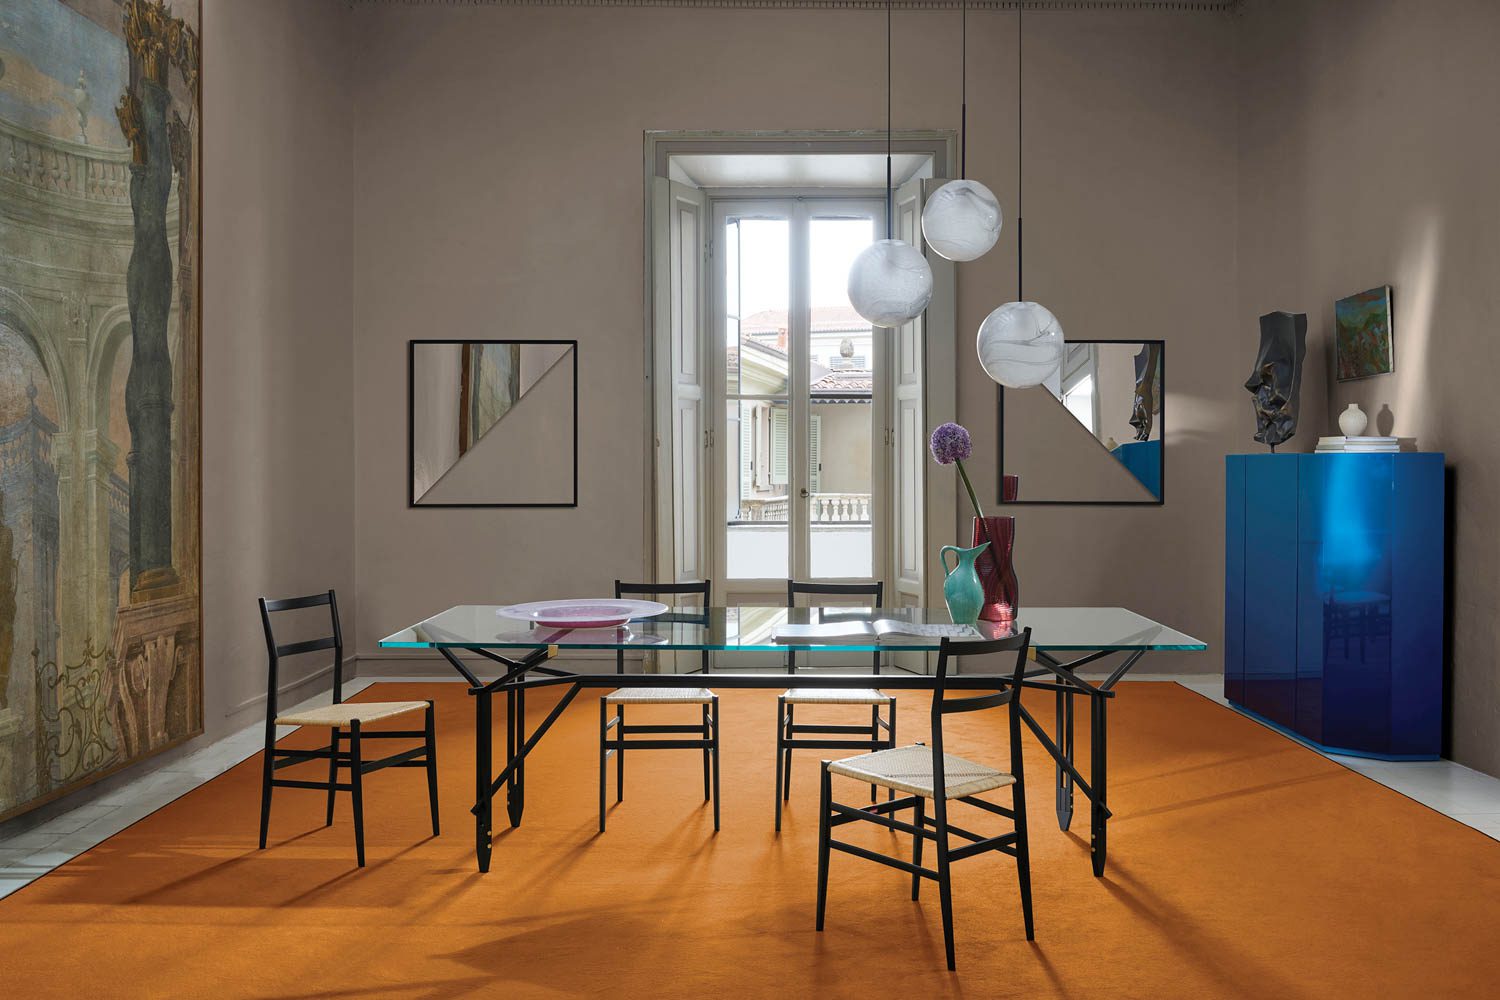 Superleggera chairs around a glass dining table